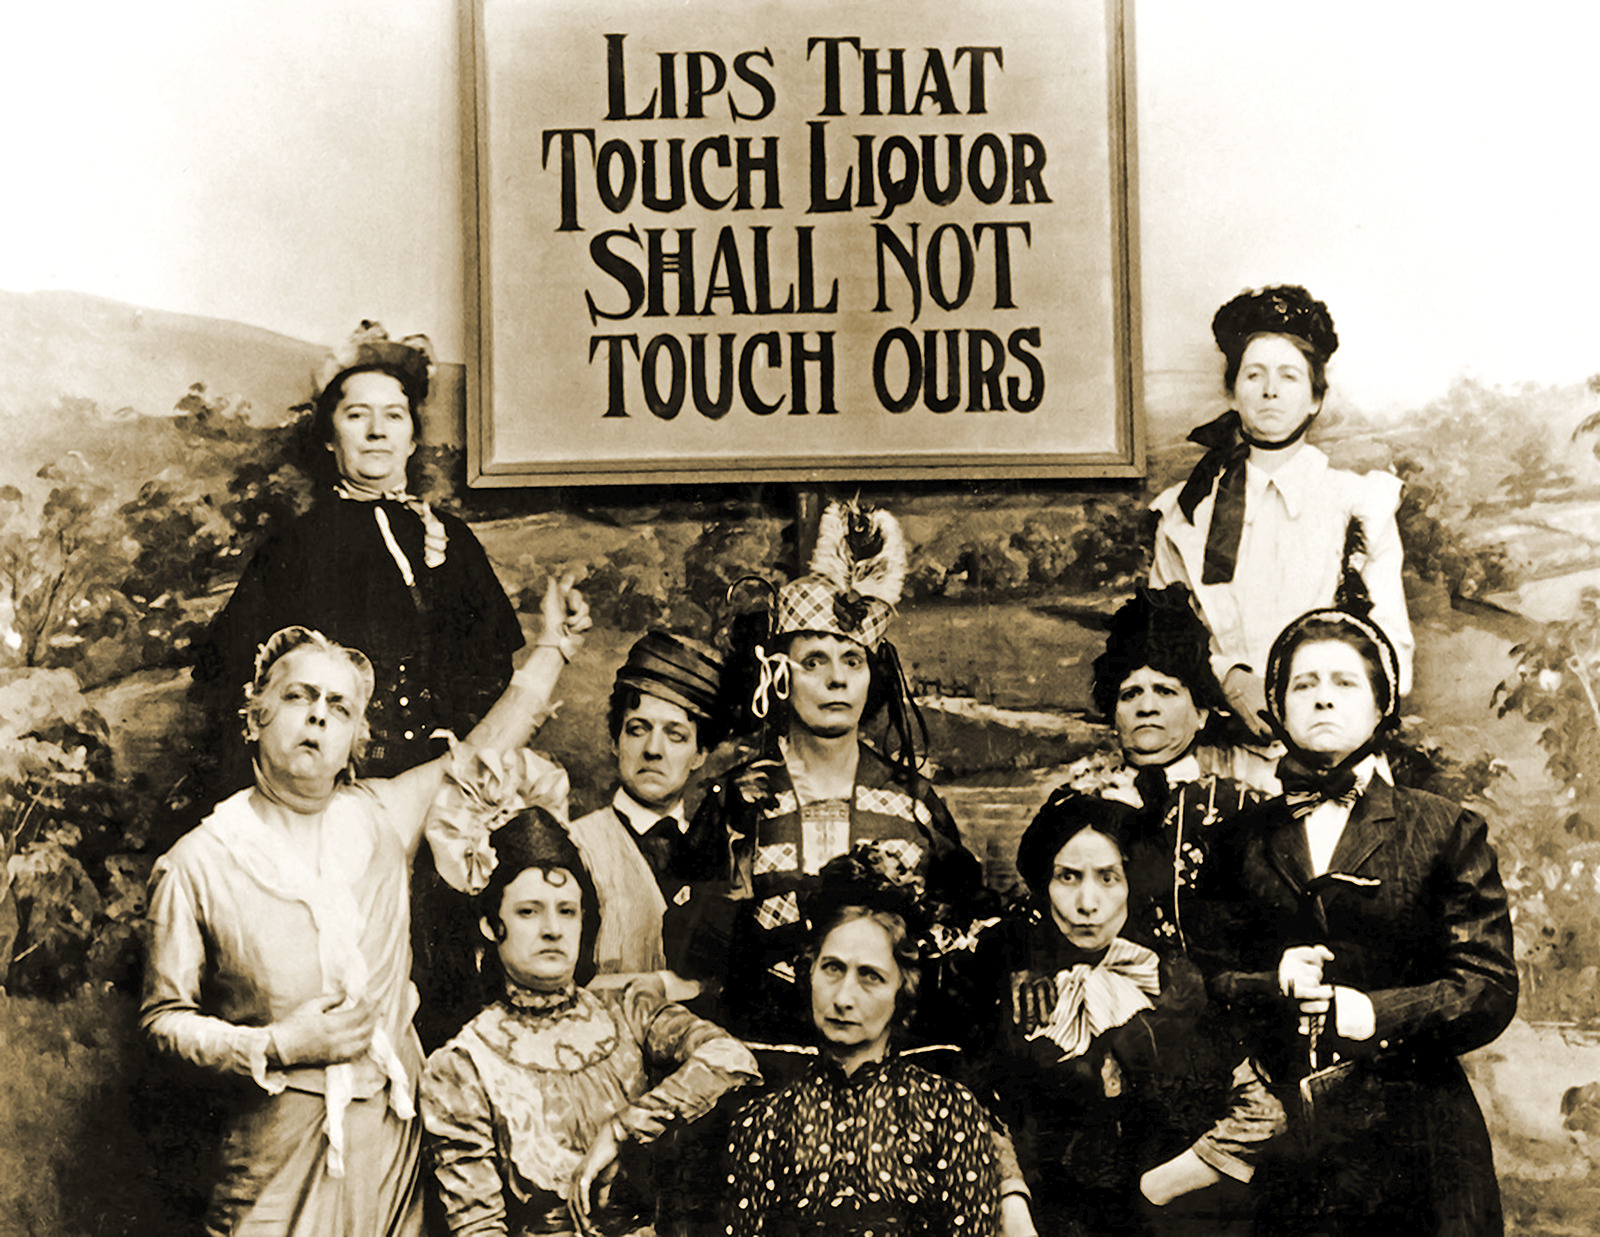 1901 Lips That Touch Liquor Prohibition Vintage Old Photo drunk 13 x 19 Reprint